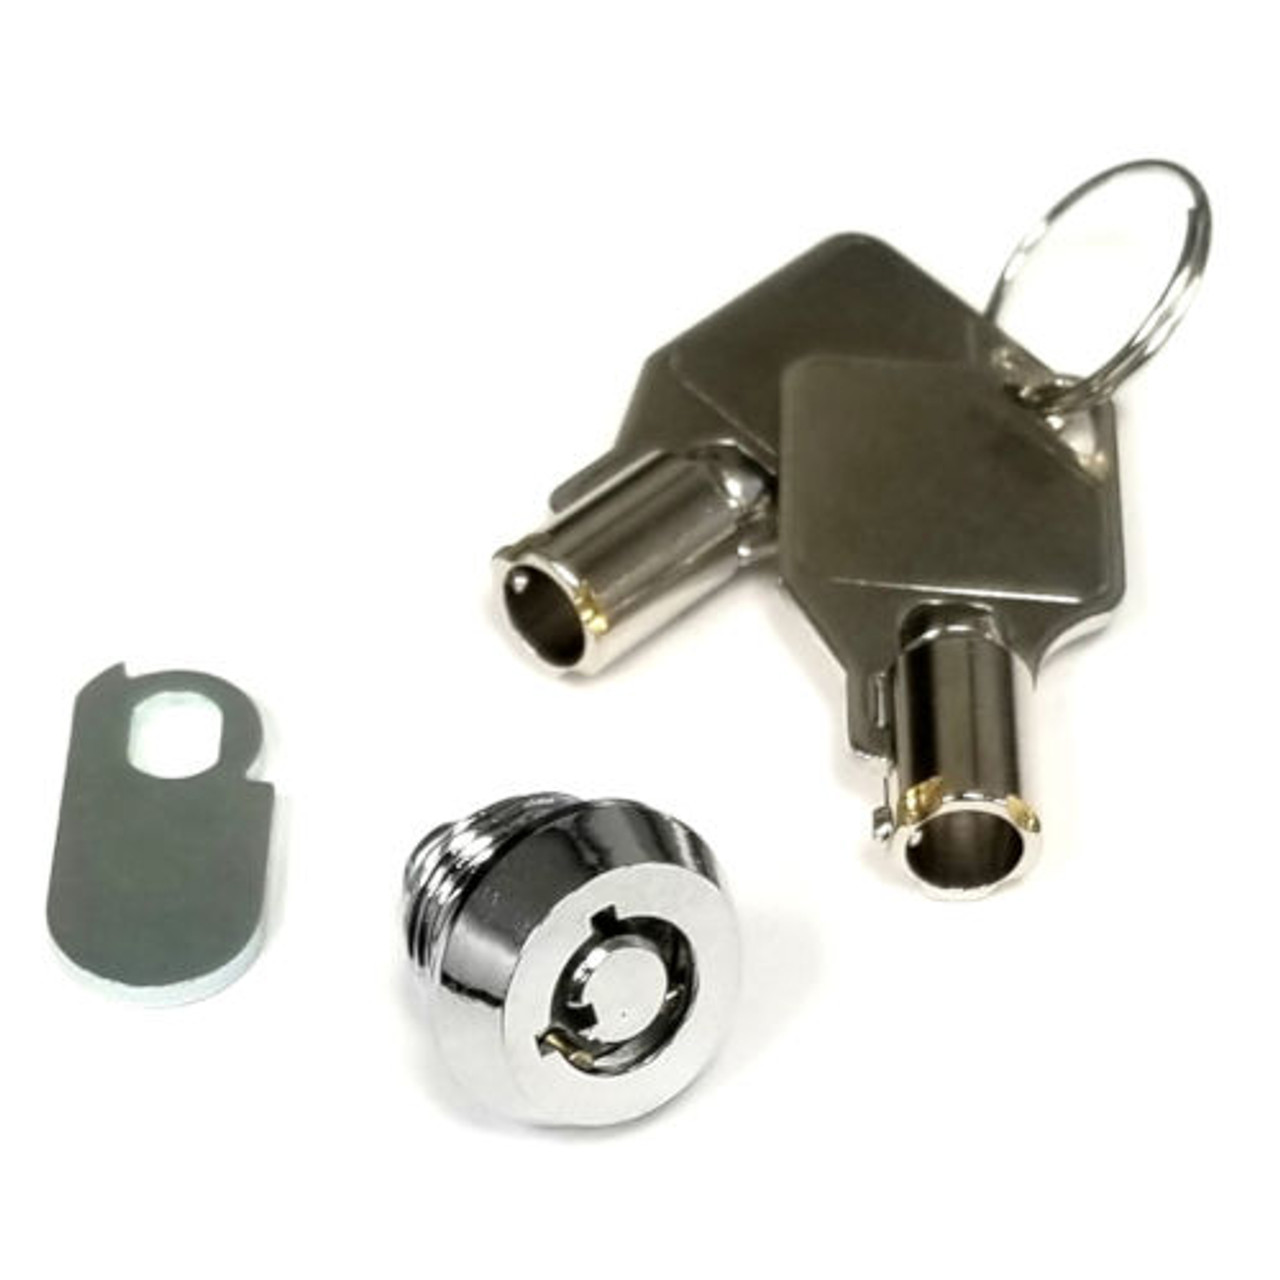 Cut Key 0050 for Mini Tubular Cam Lock